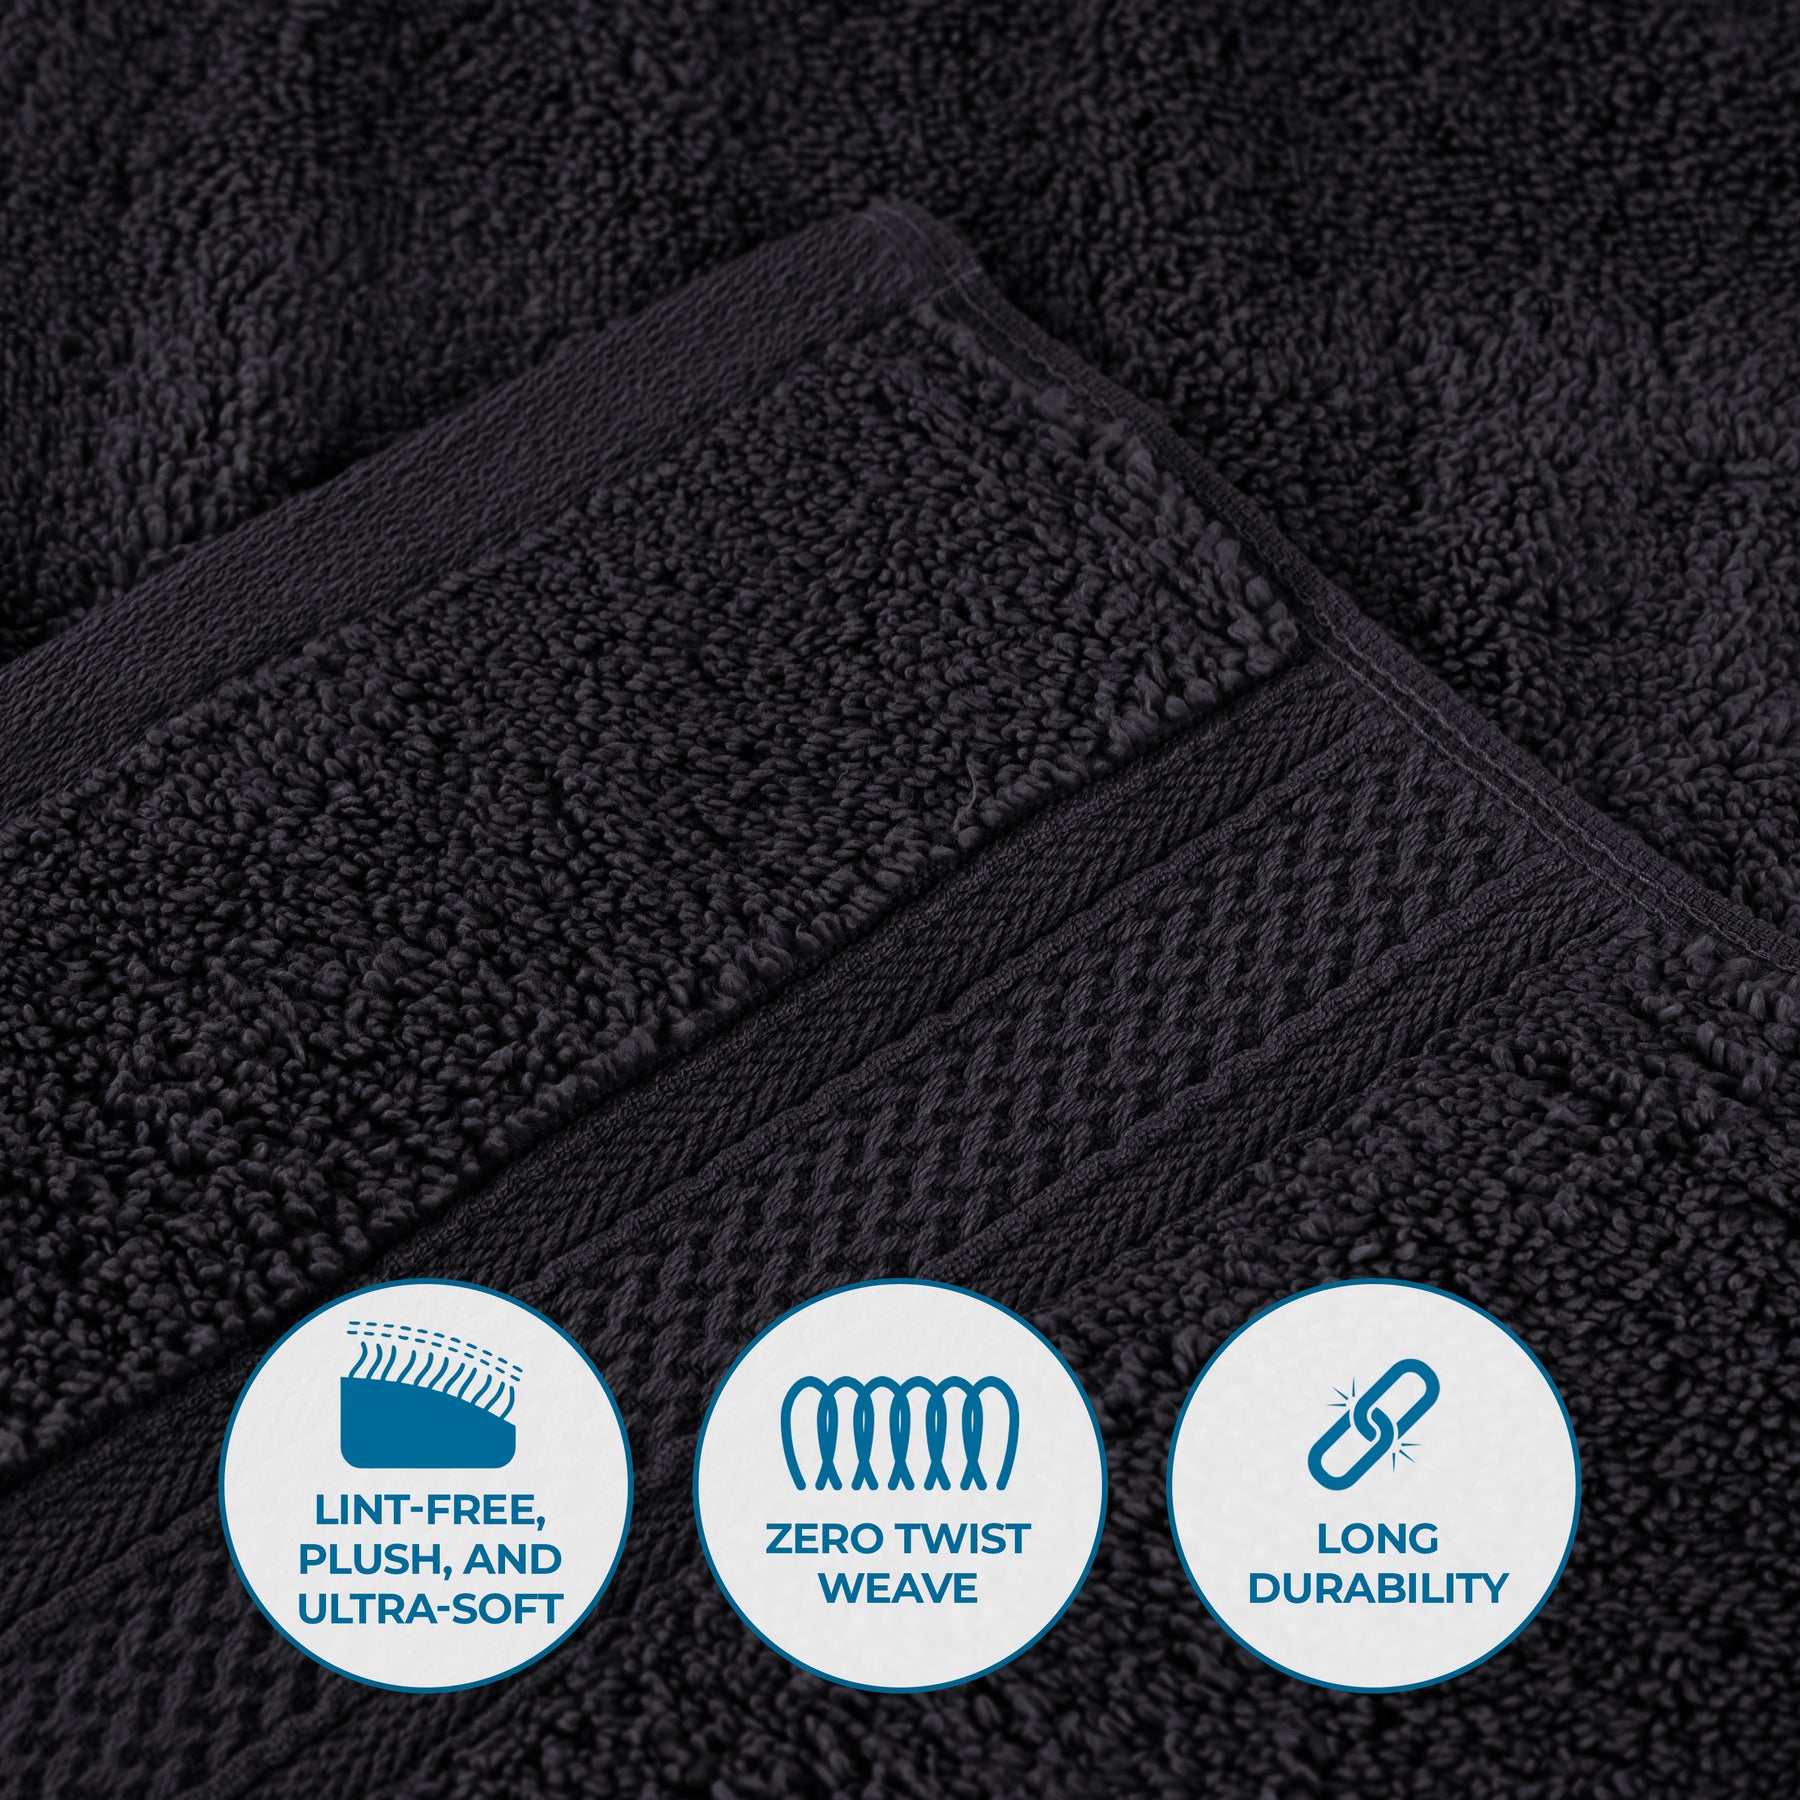 Chevron Zero Twist Cotton Solid and Jacquard Bath Sheet - Black